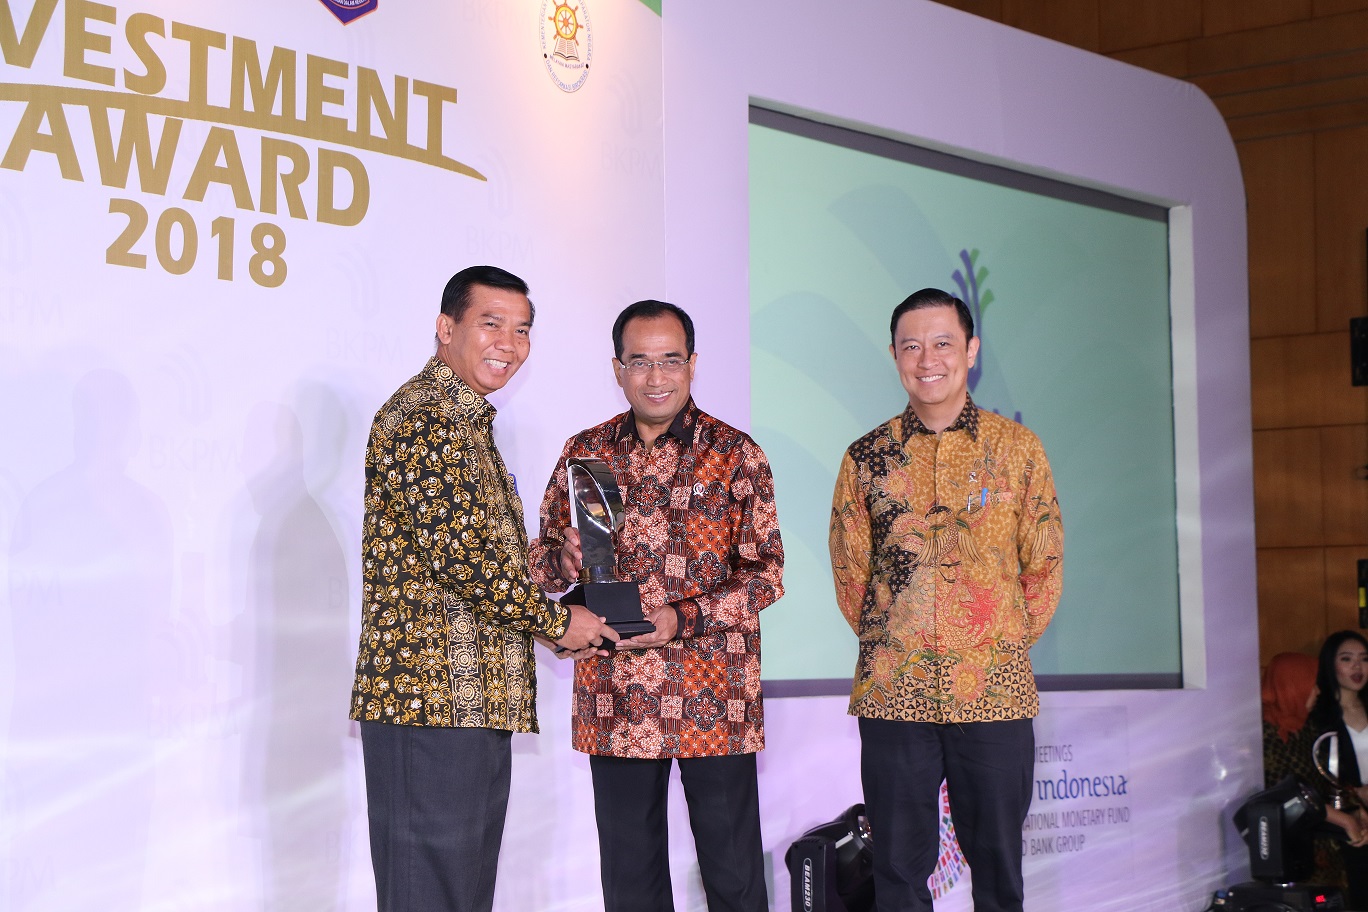 Investment Award 2018